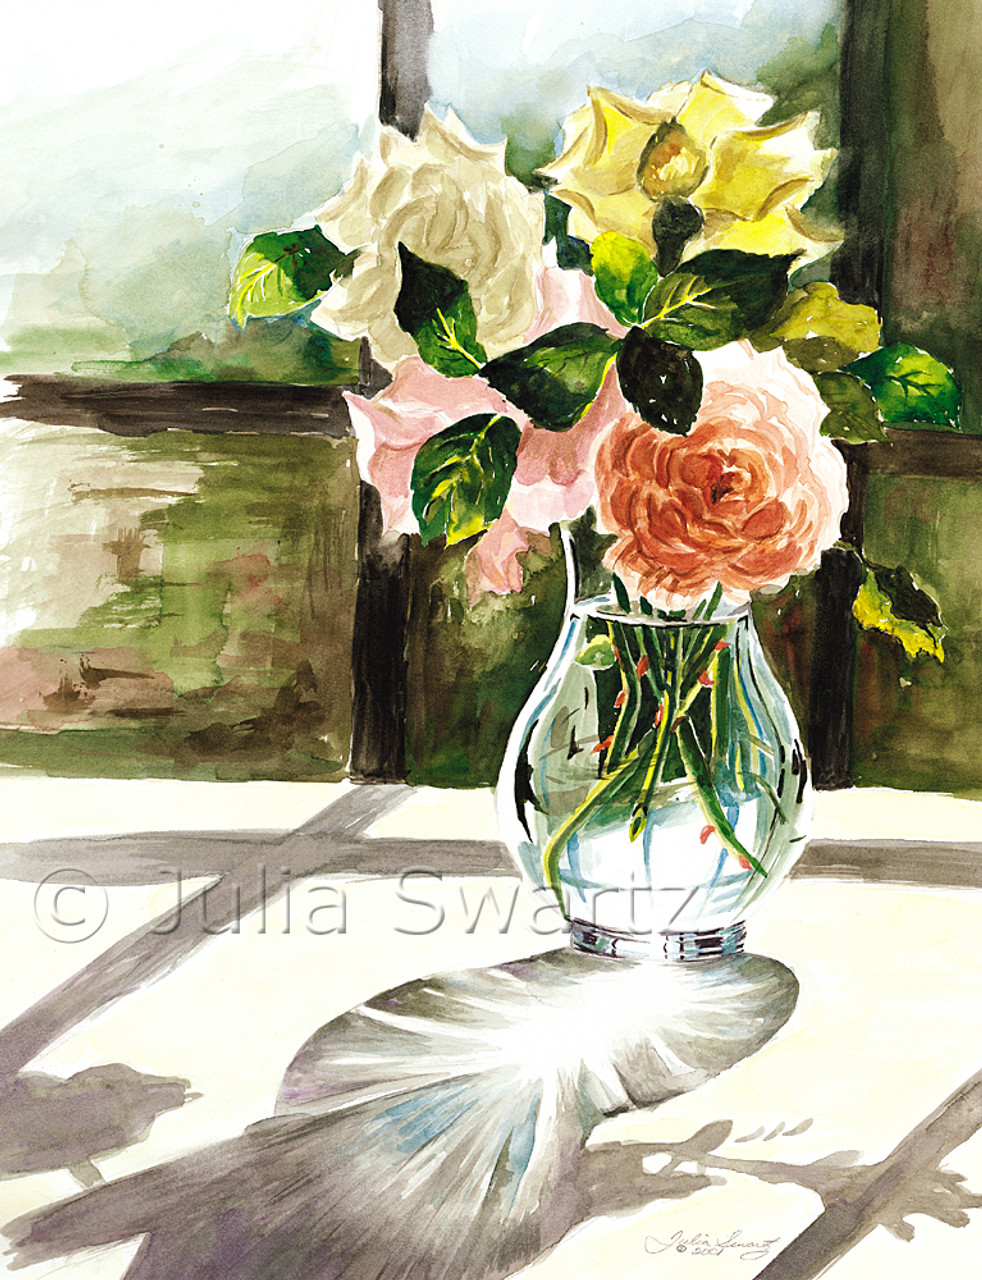 rose watercolor painting